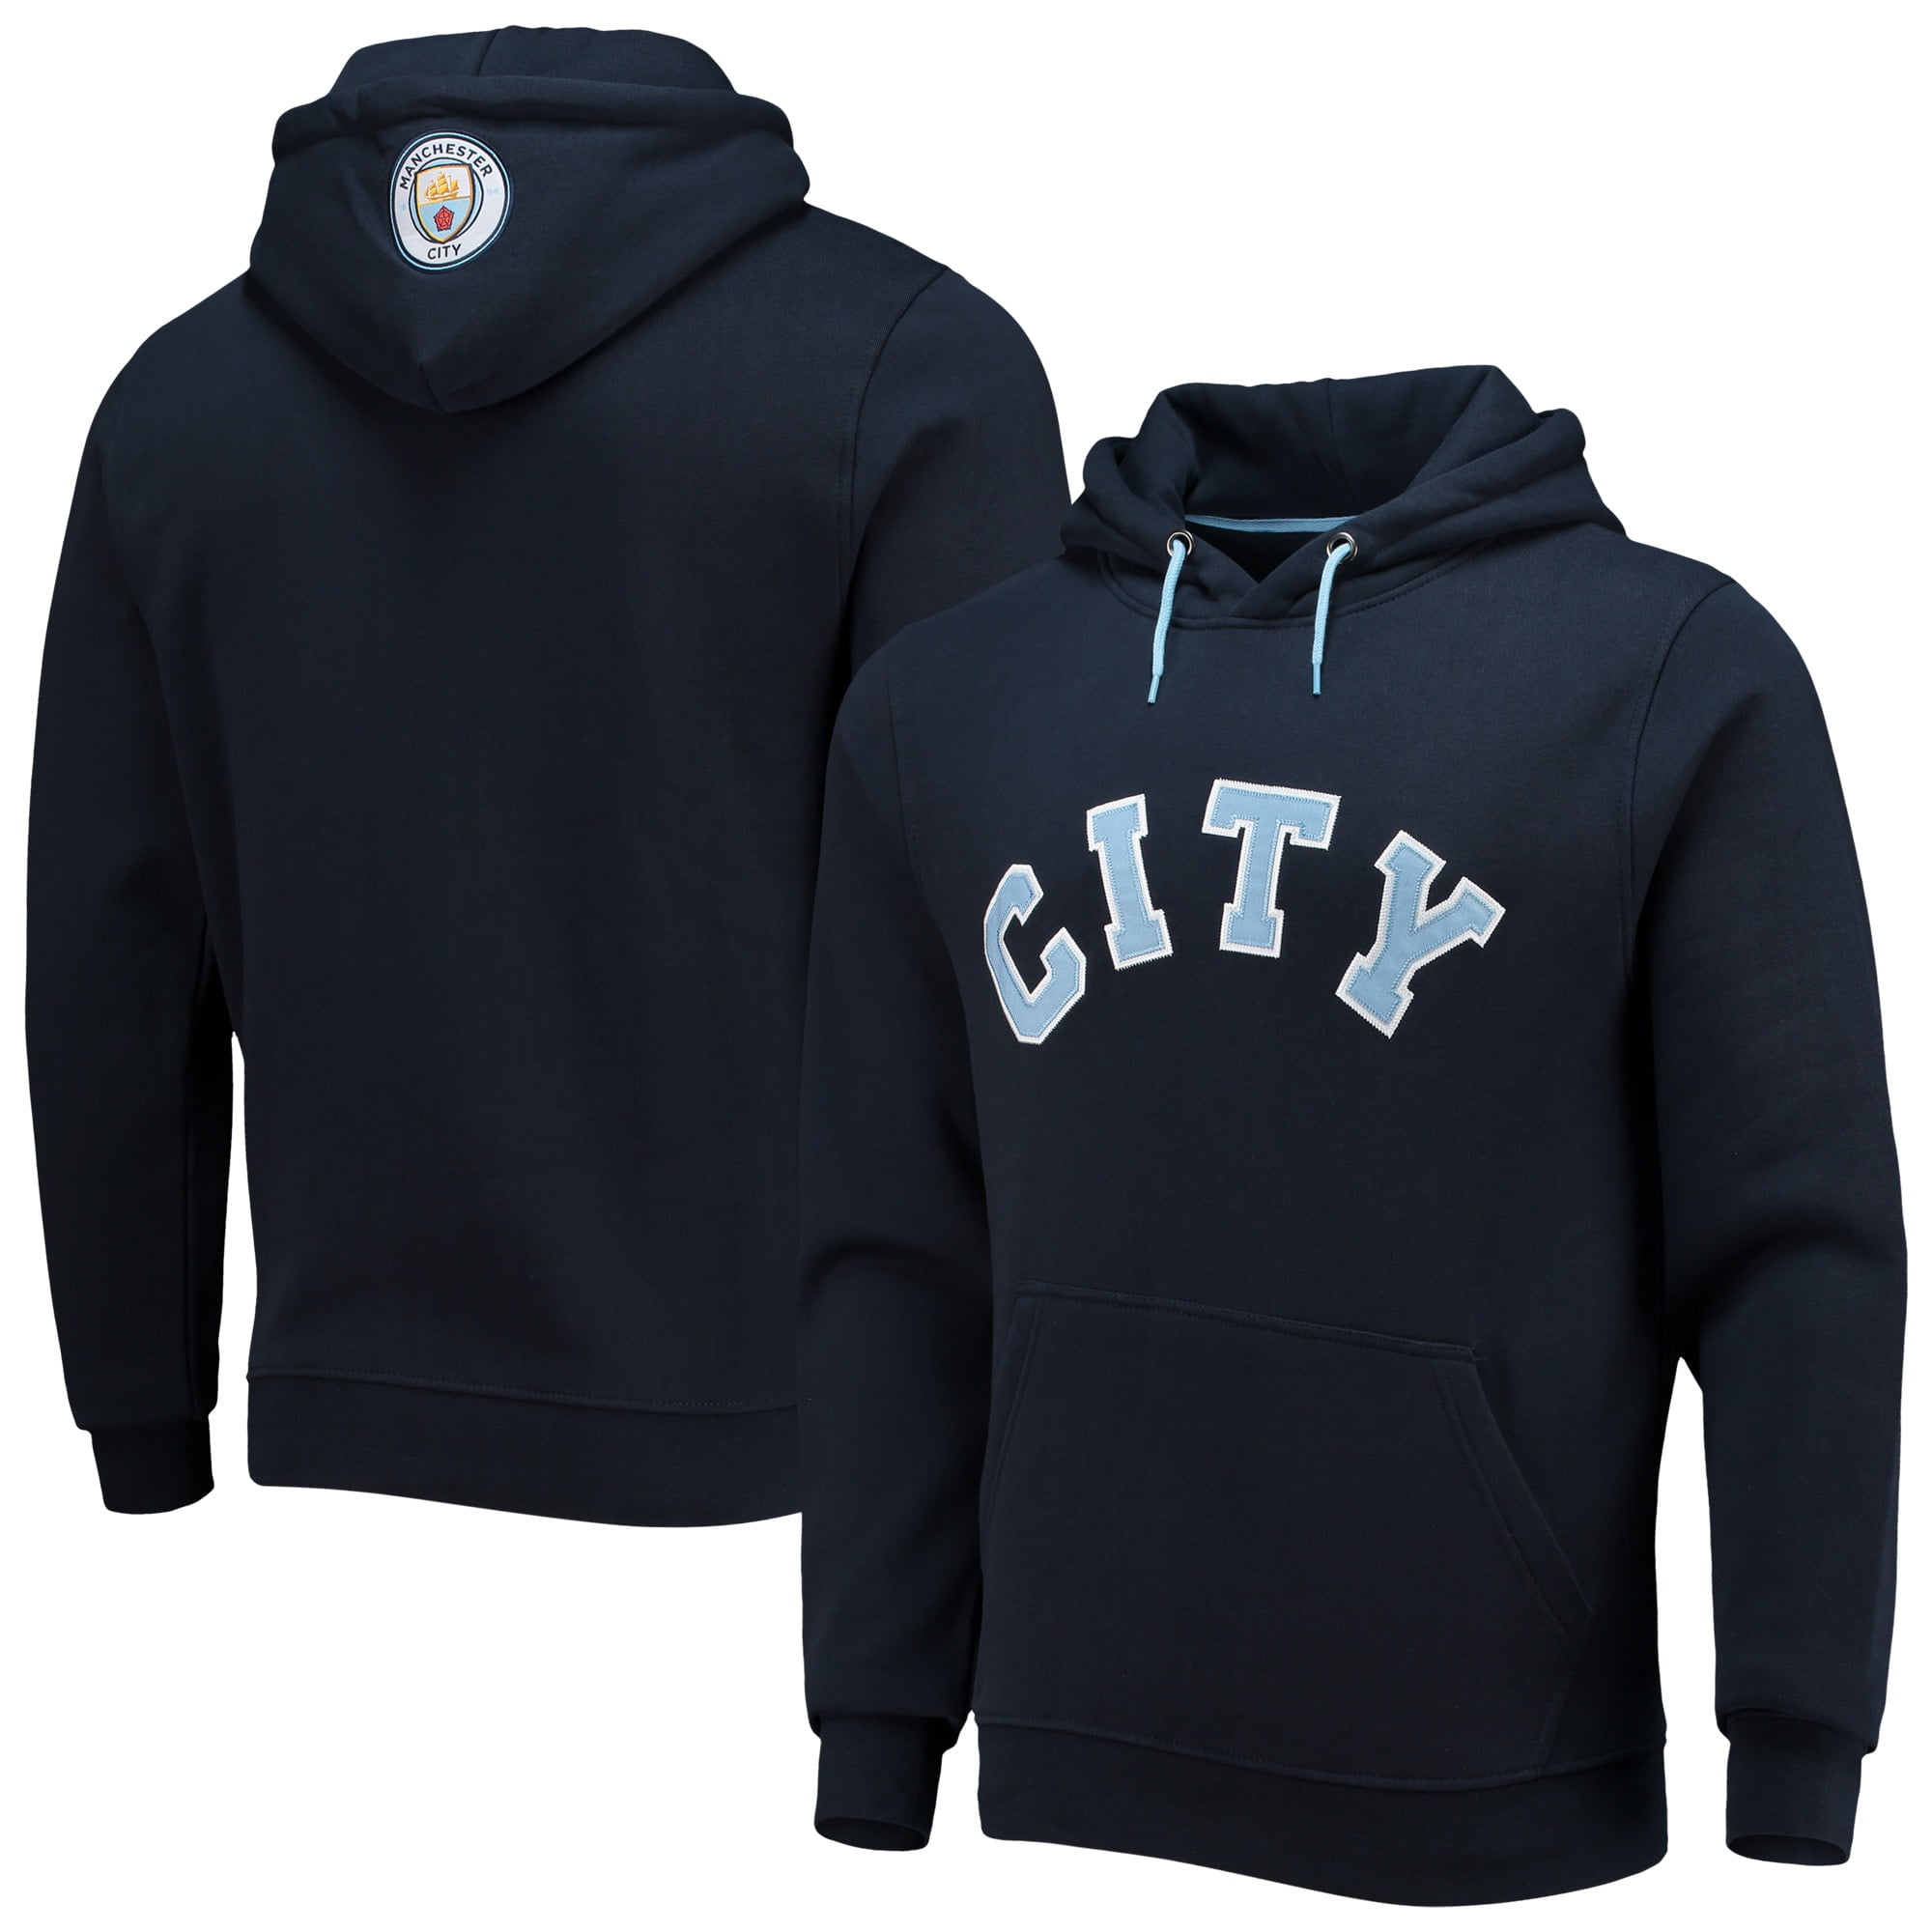 Sweatshirt manchester city original official adult child hooded citizen 